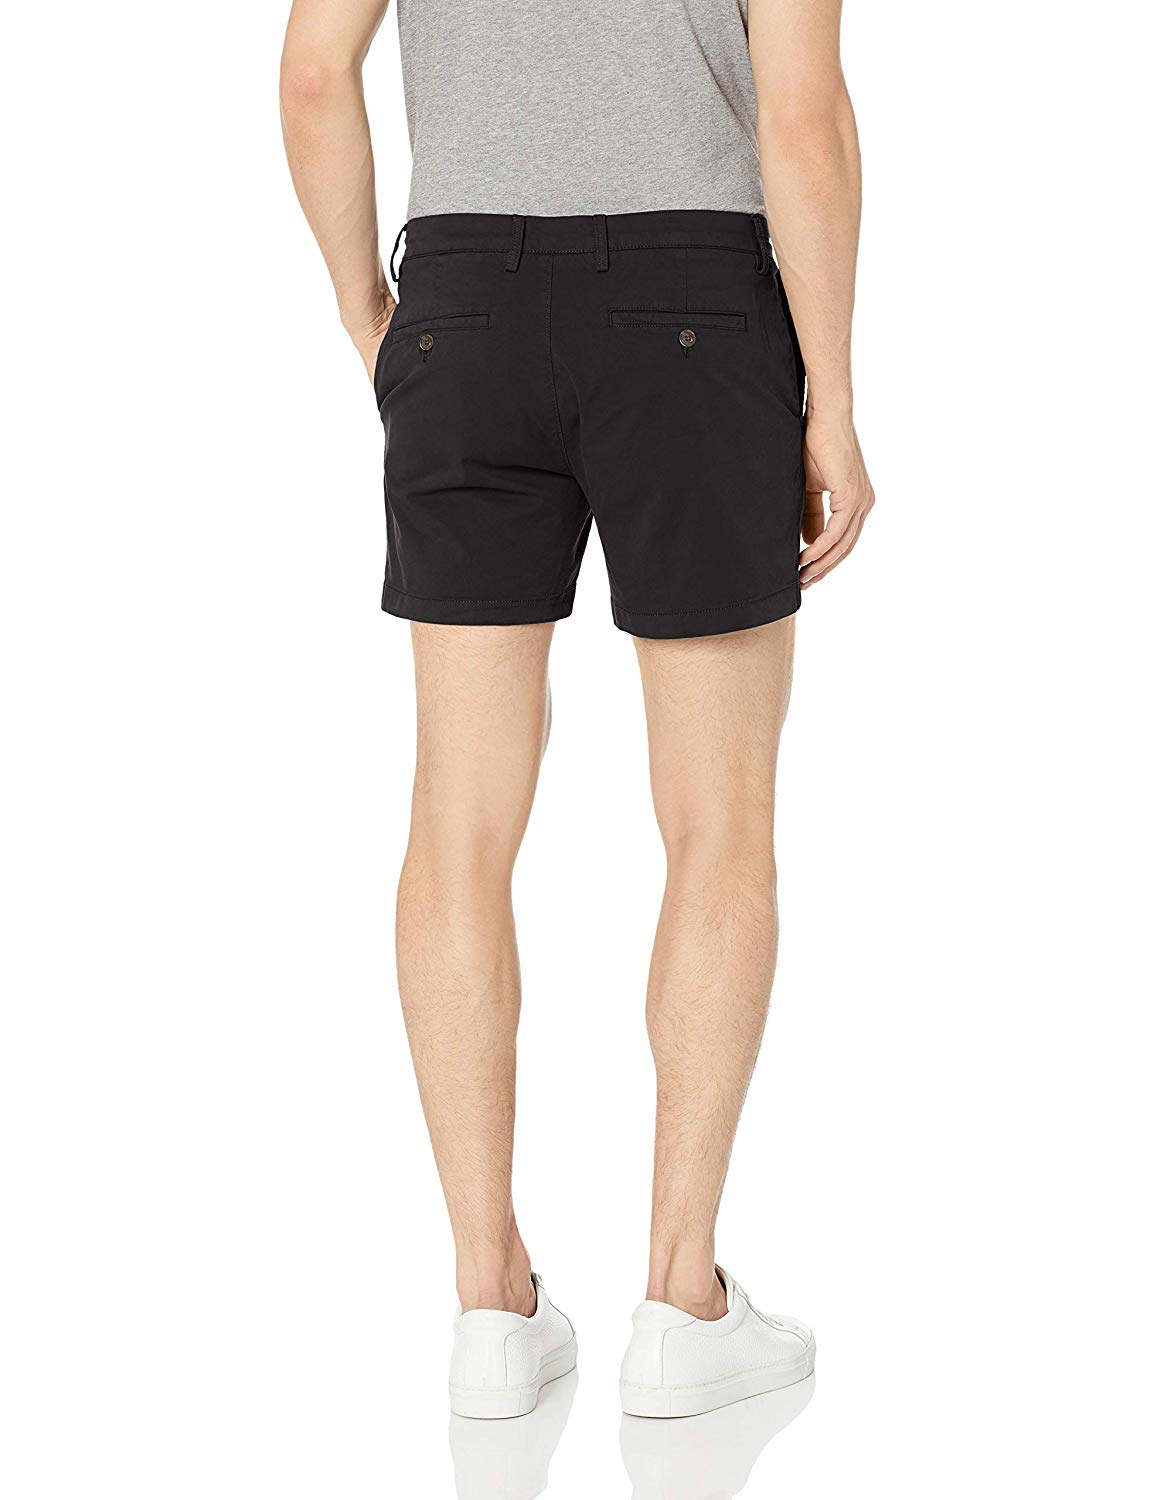 men's shorts 5 inseam